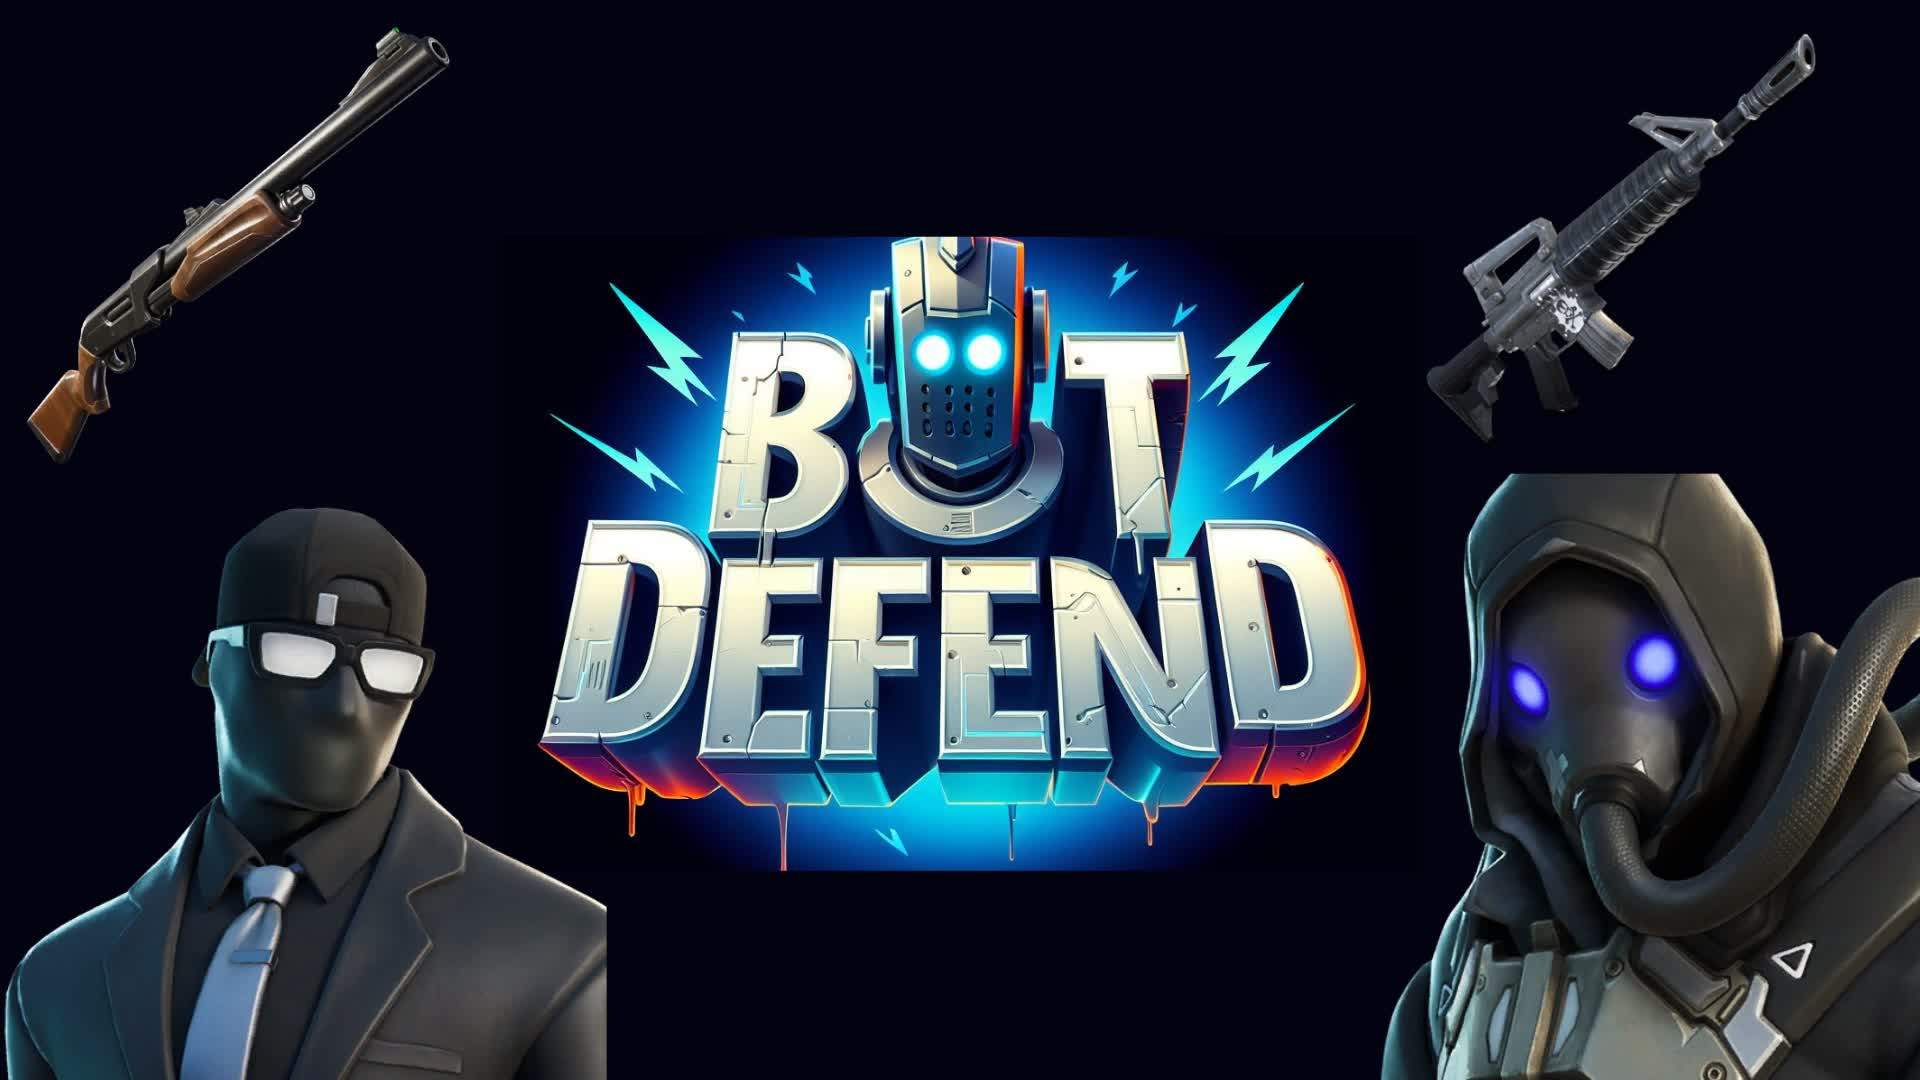 Bot Defend !